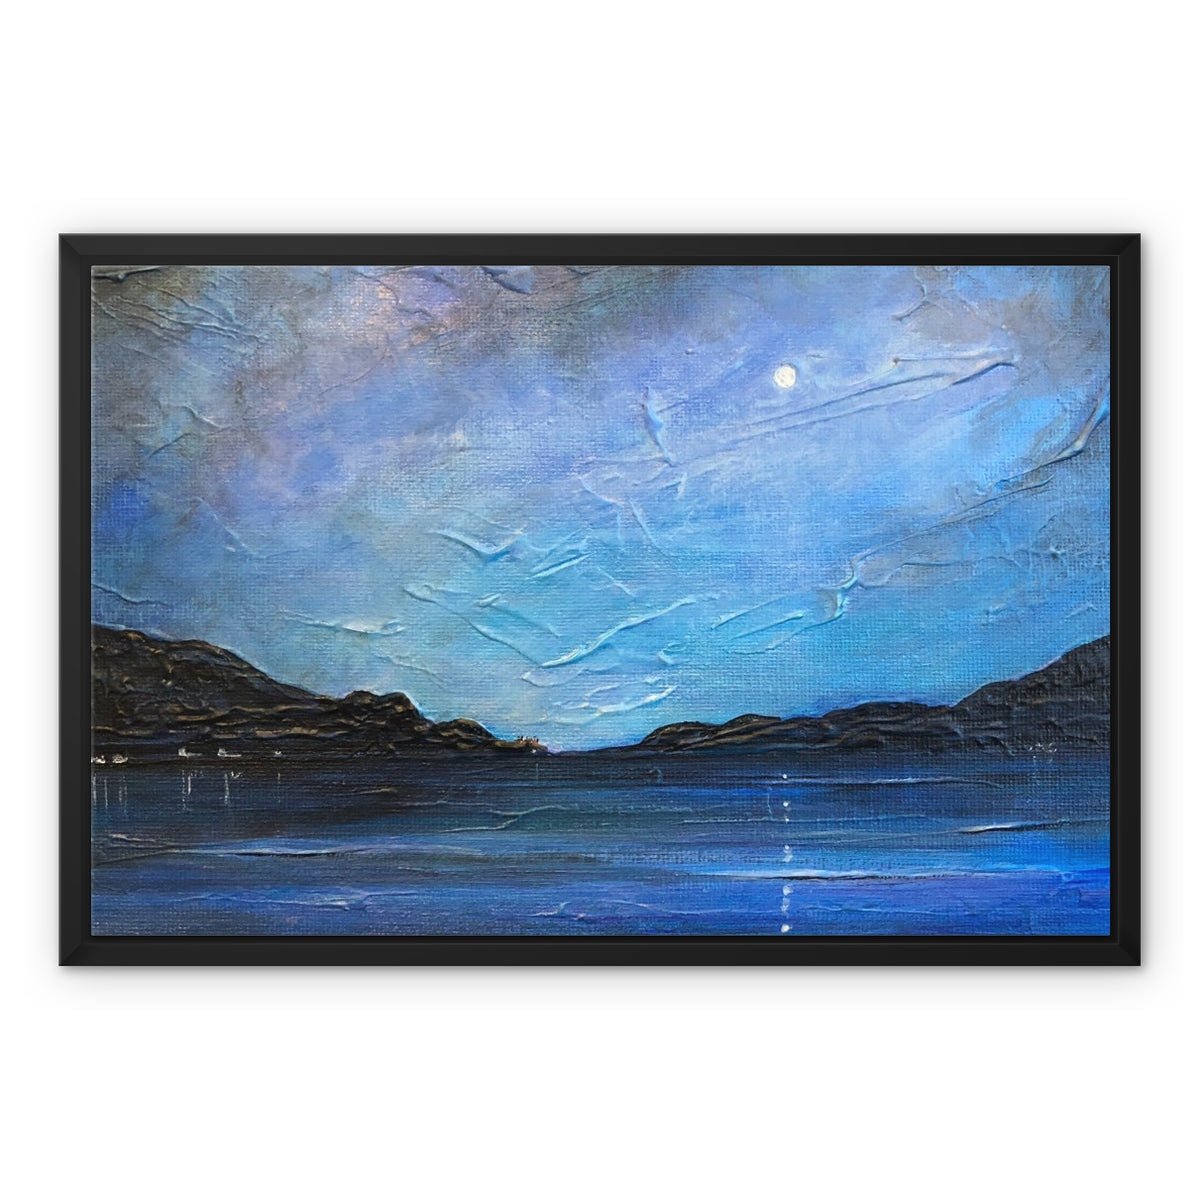 Loch Ness Moonlight Painting | Framed Canvas From Scotland-Floating Framed Canvas Prints-Scottish Lochs & Mountains Art Gallery-24"x18"-Black Frame-Paintings, Prints, Homeware, Art Gifts From Scotland By Scottish Artist Kevin Hunter